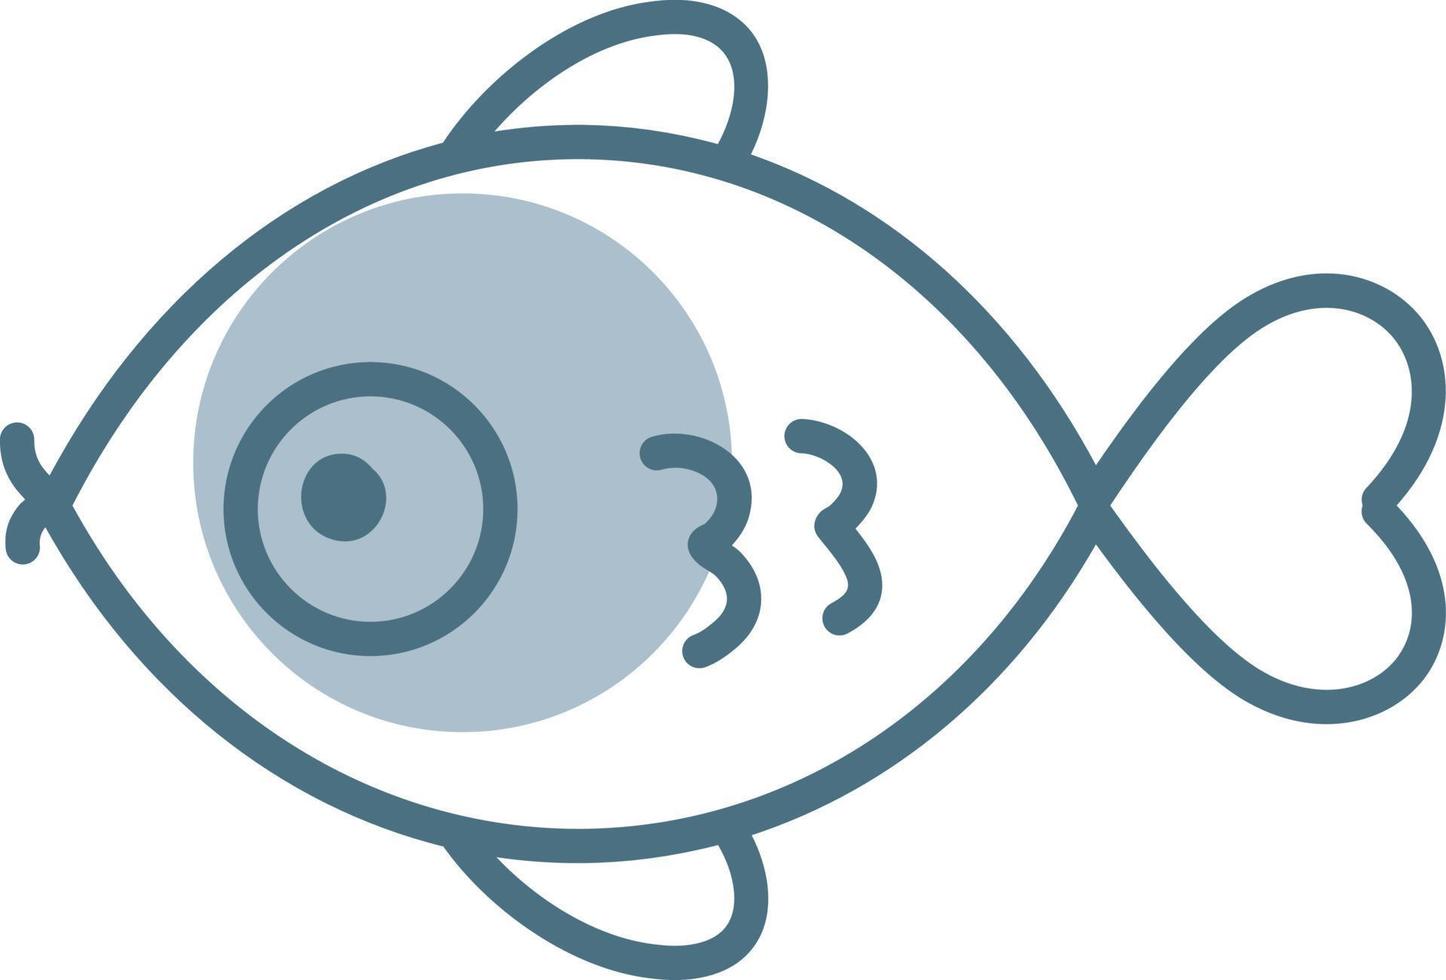 pescado azul, ilustración, vector sobre fondo blanco.